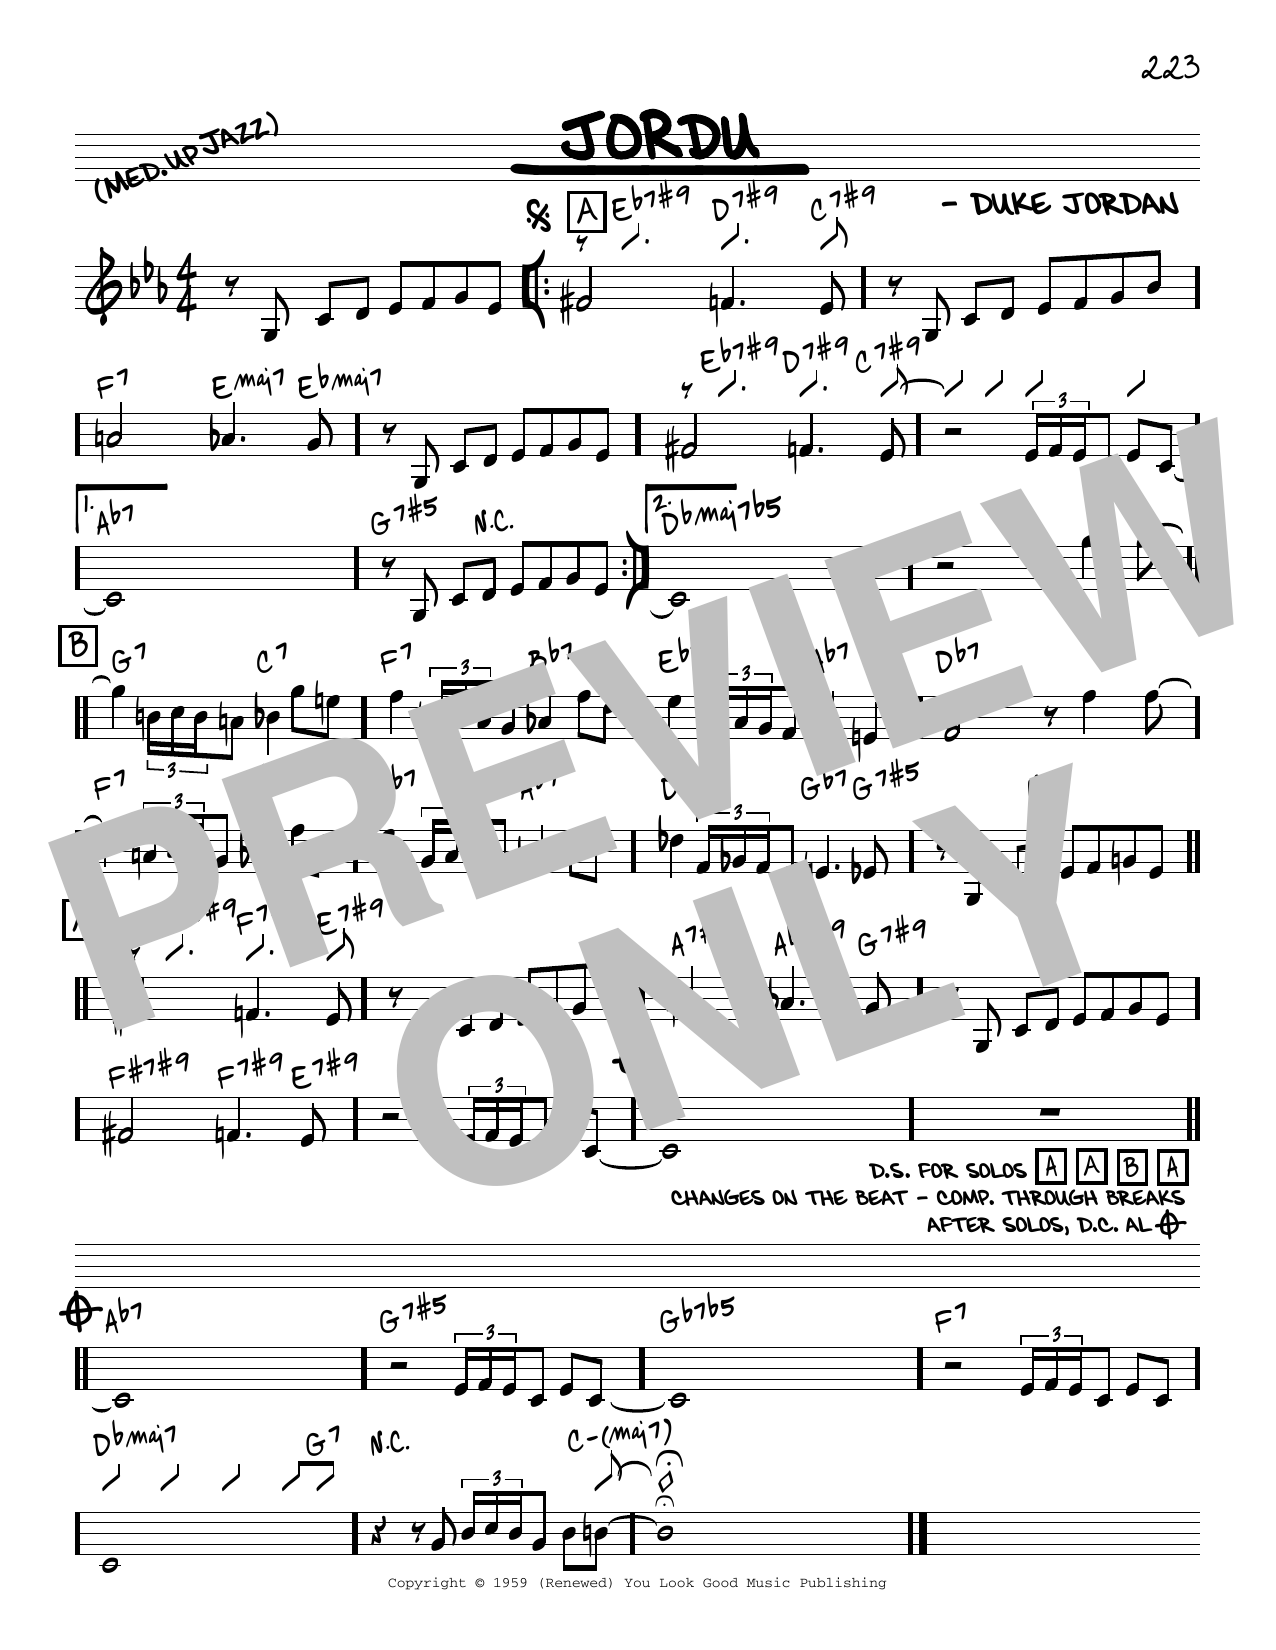 Duke Jordan Jordu [Reharmonized version] (arr. Jack Grassel) sheet music notes and chords arranged for Real Book – Melody & Chords